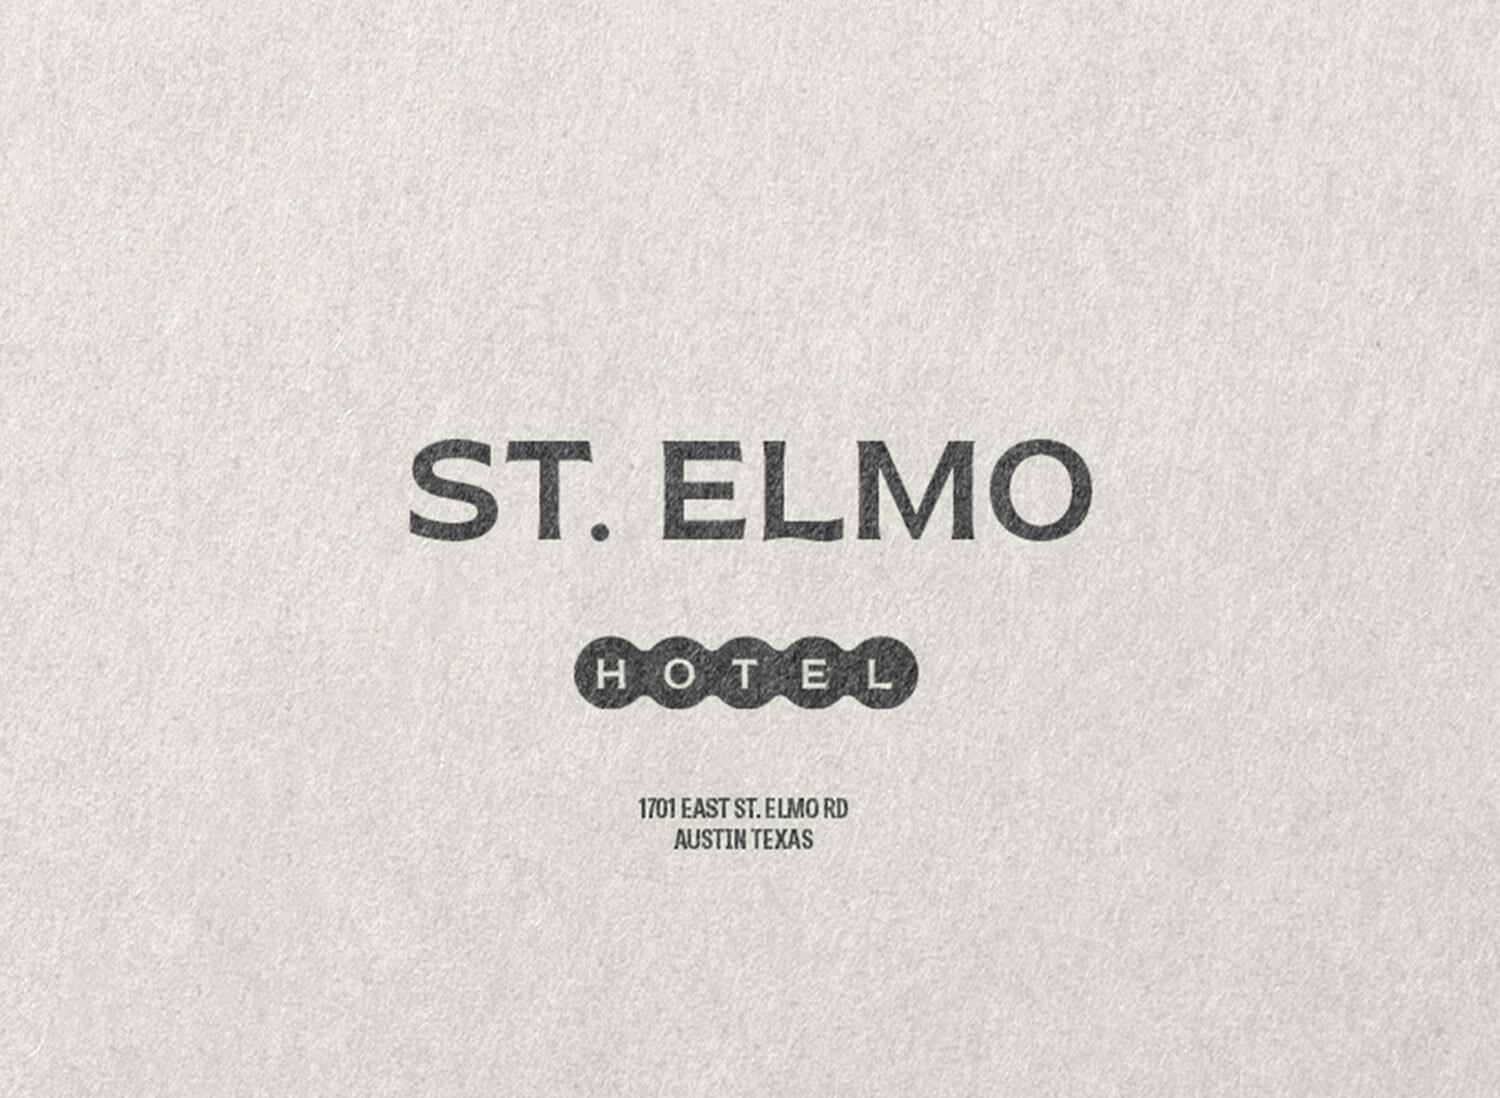 st elmo hotel brand business card